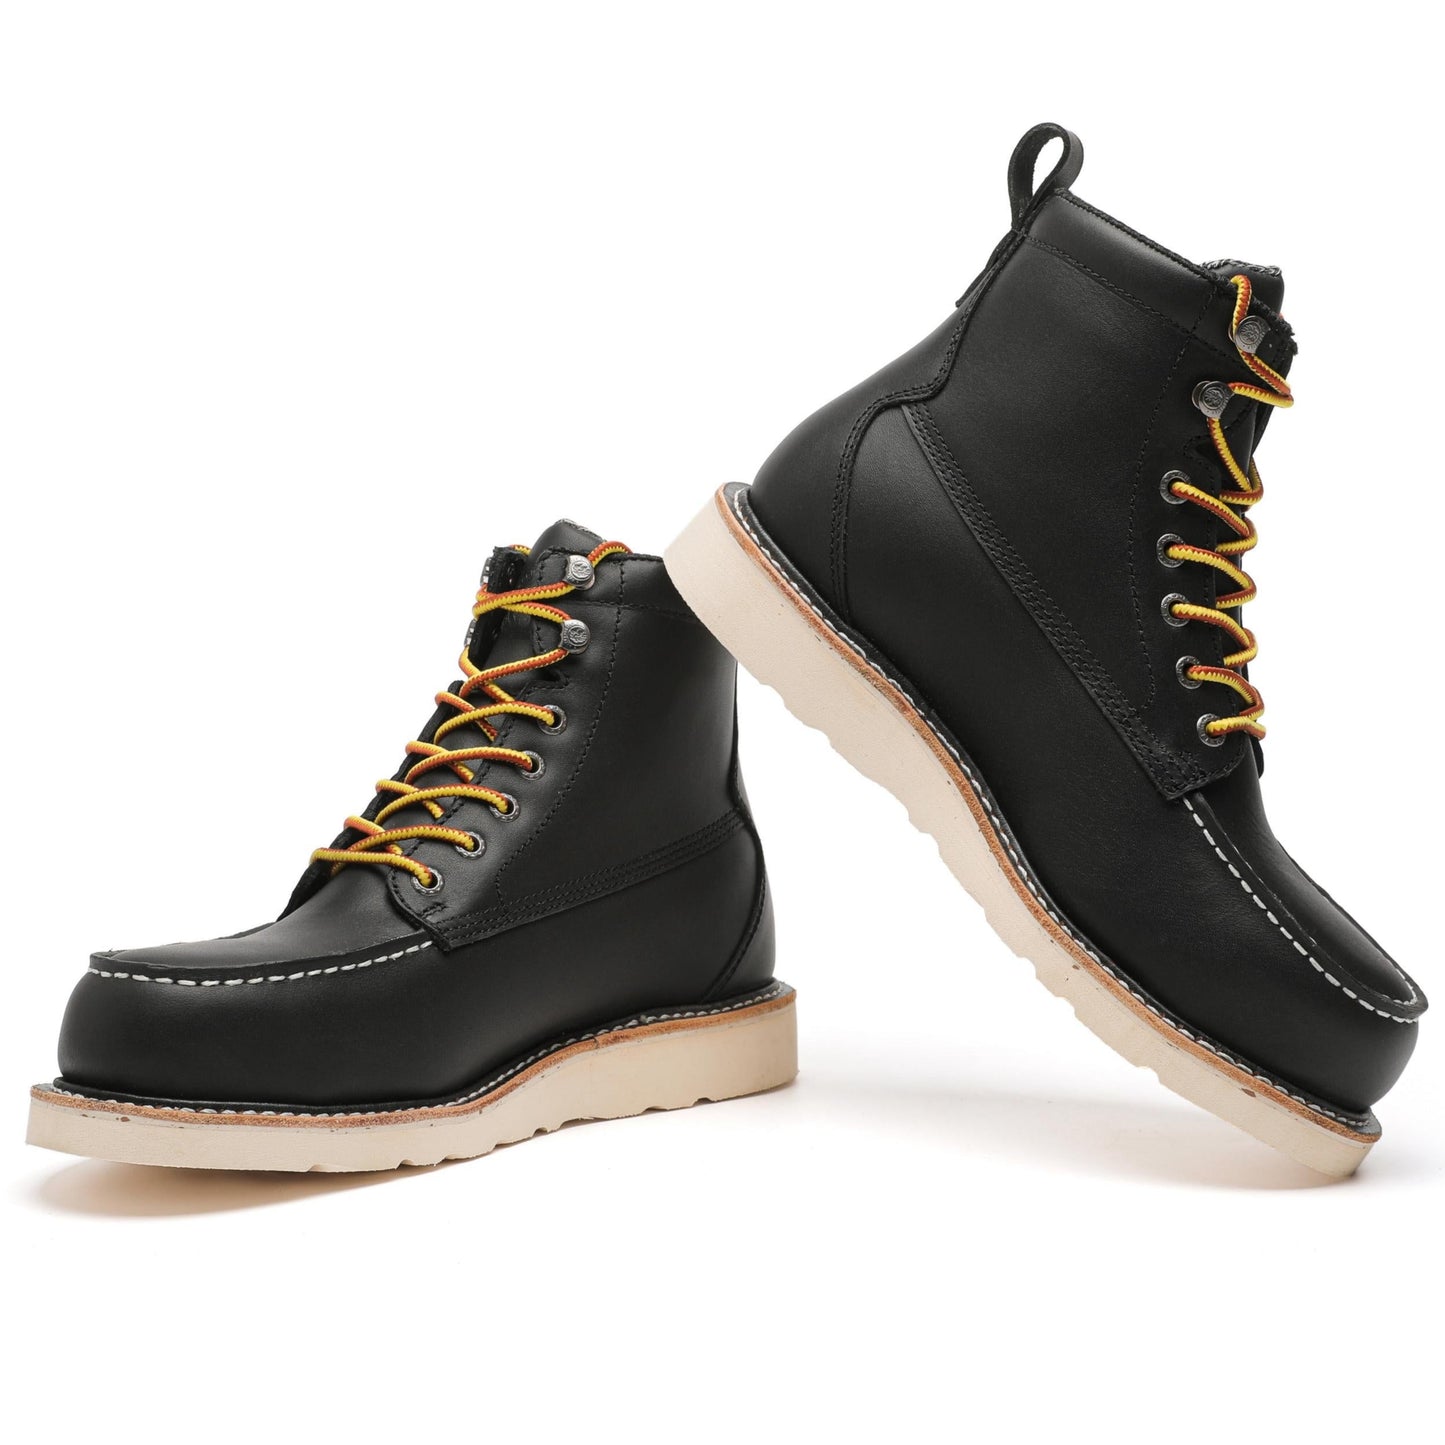 ROCKROOSTER Trinidad: Men's 6-Inch Black Steel Toe Safety Wedge Work Boots